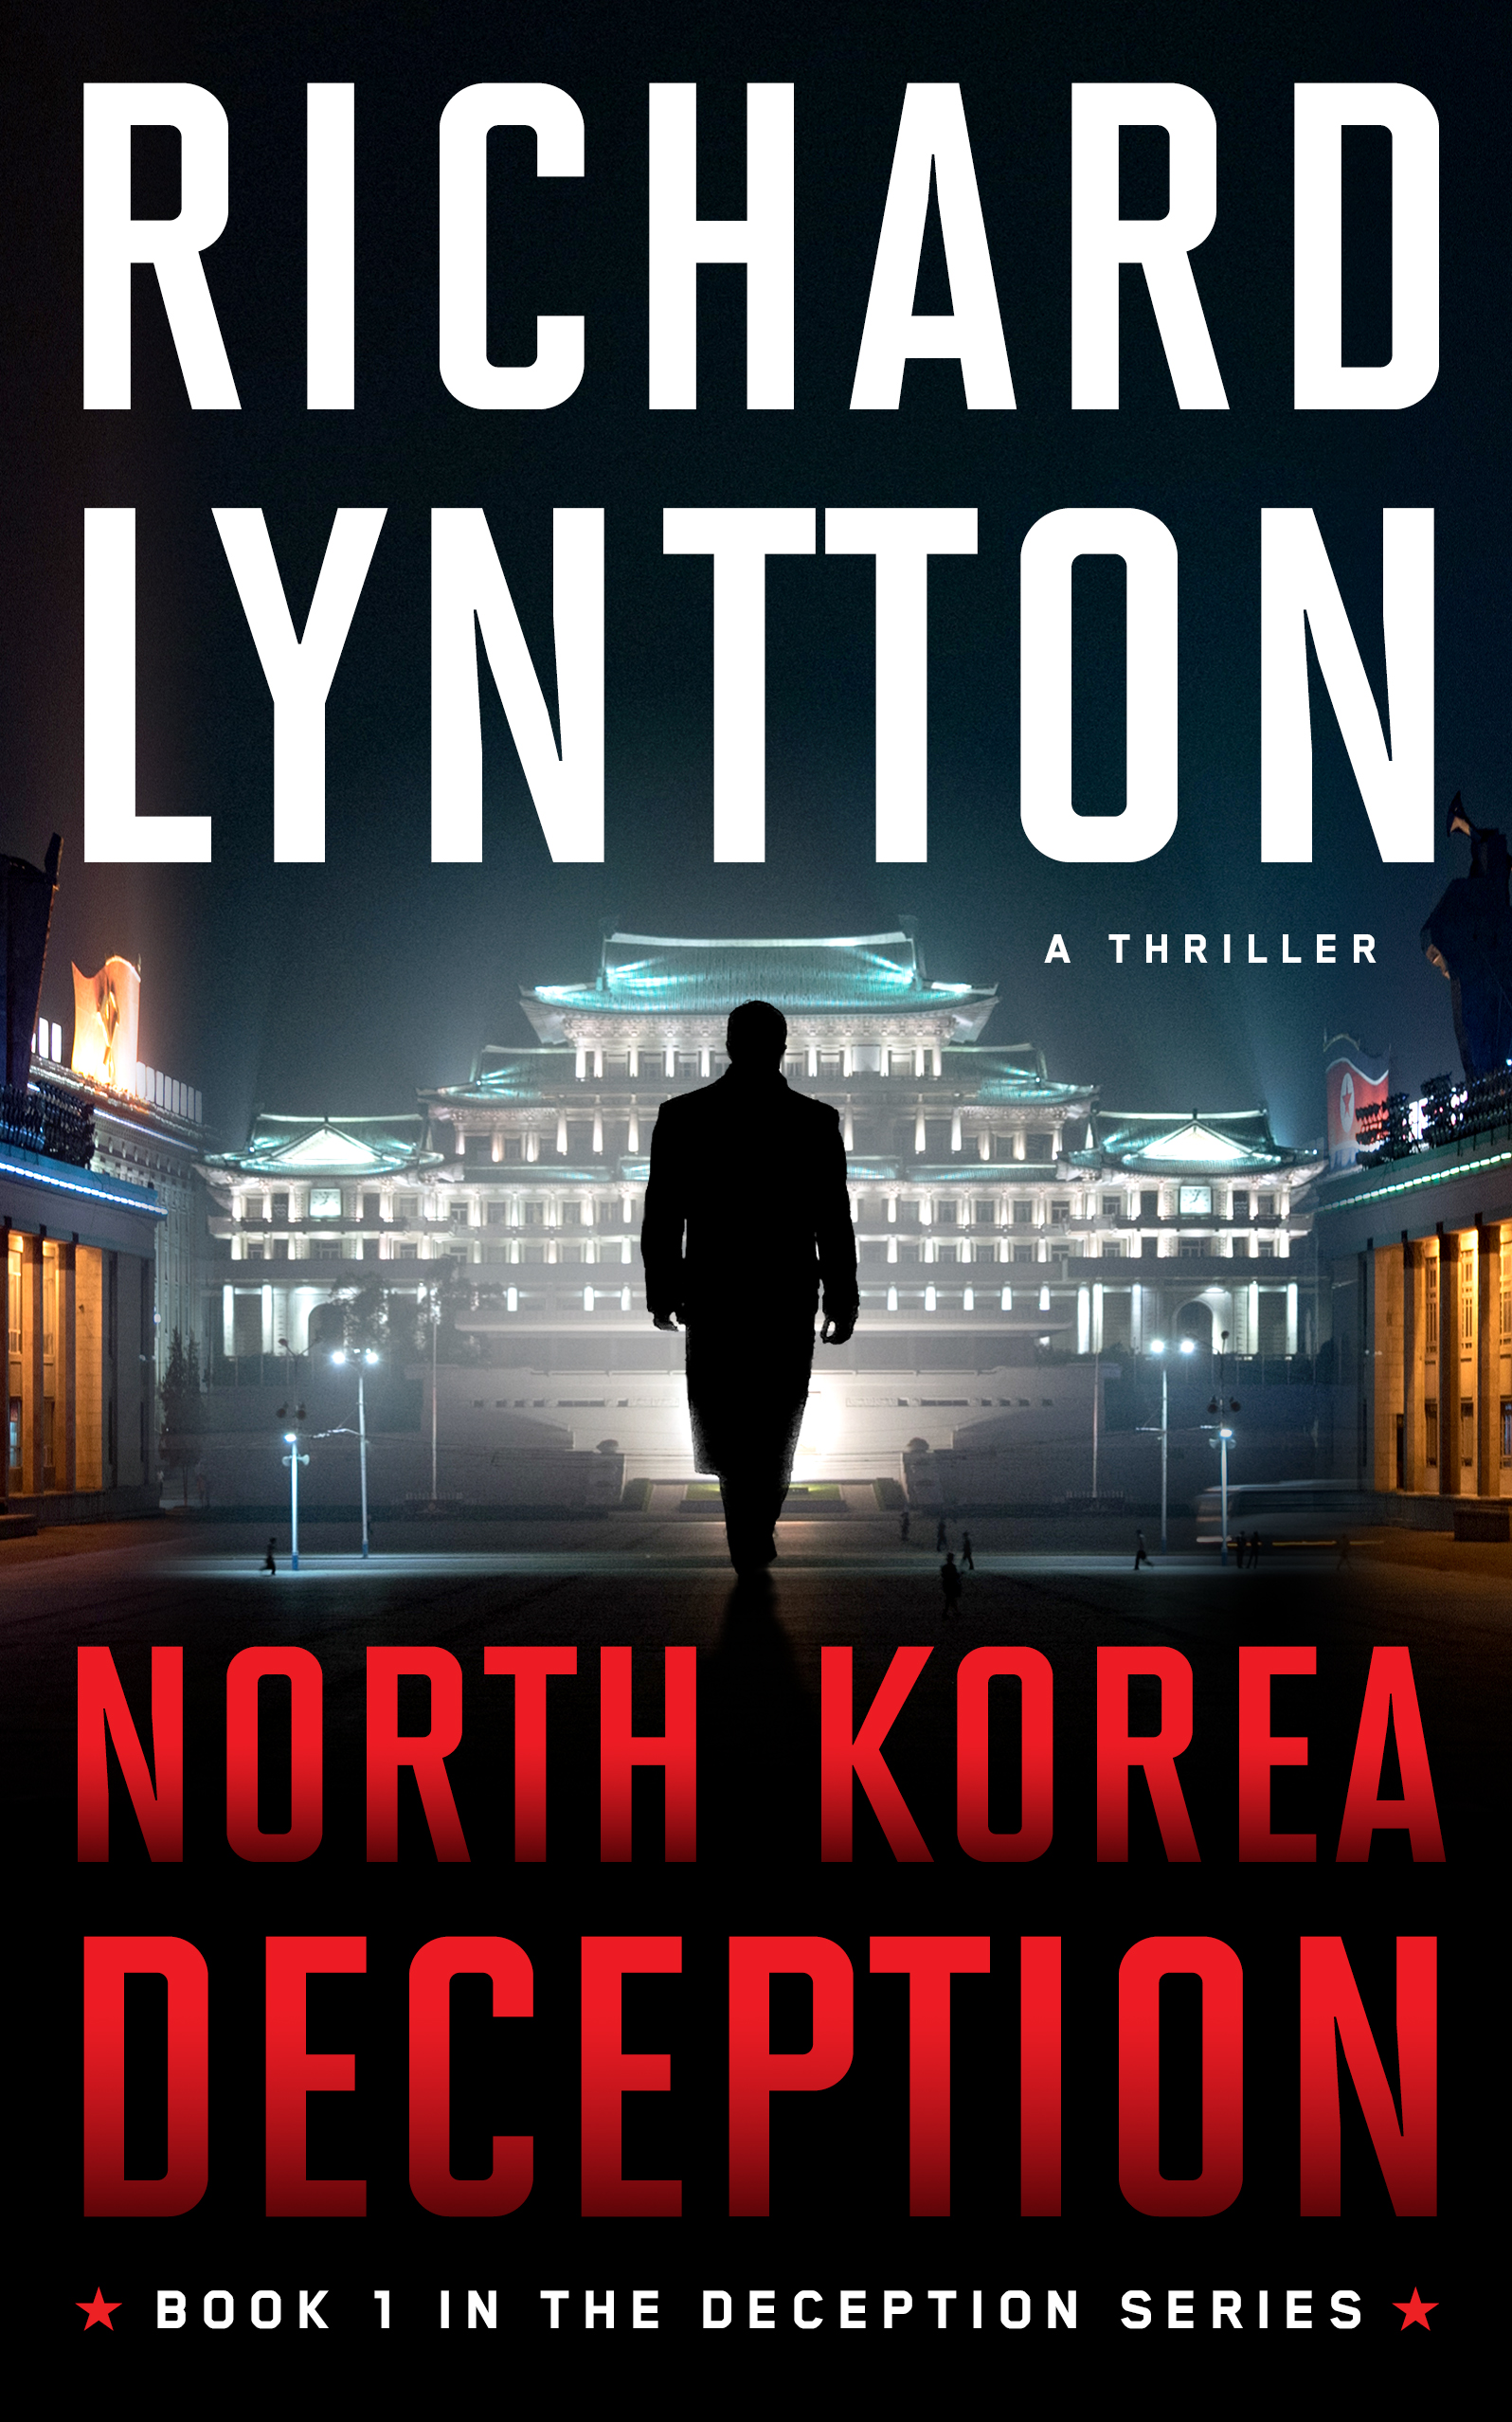 FREE: NORTH KOREA DECEPTION by Richard Lyntton